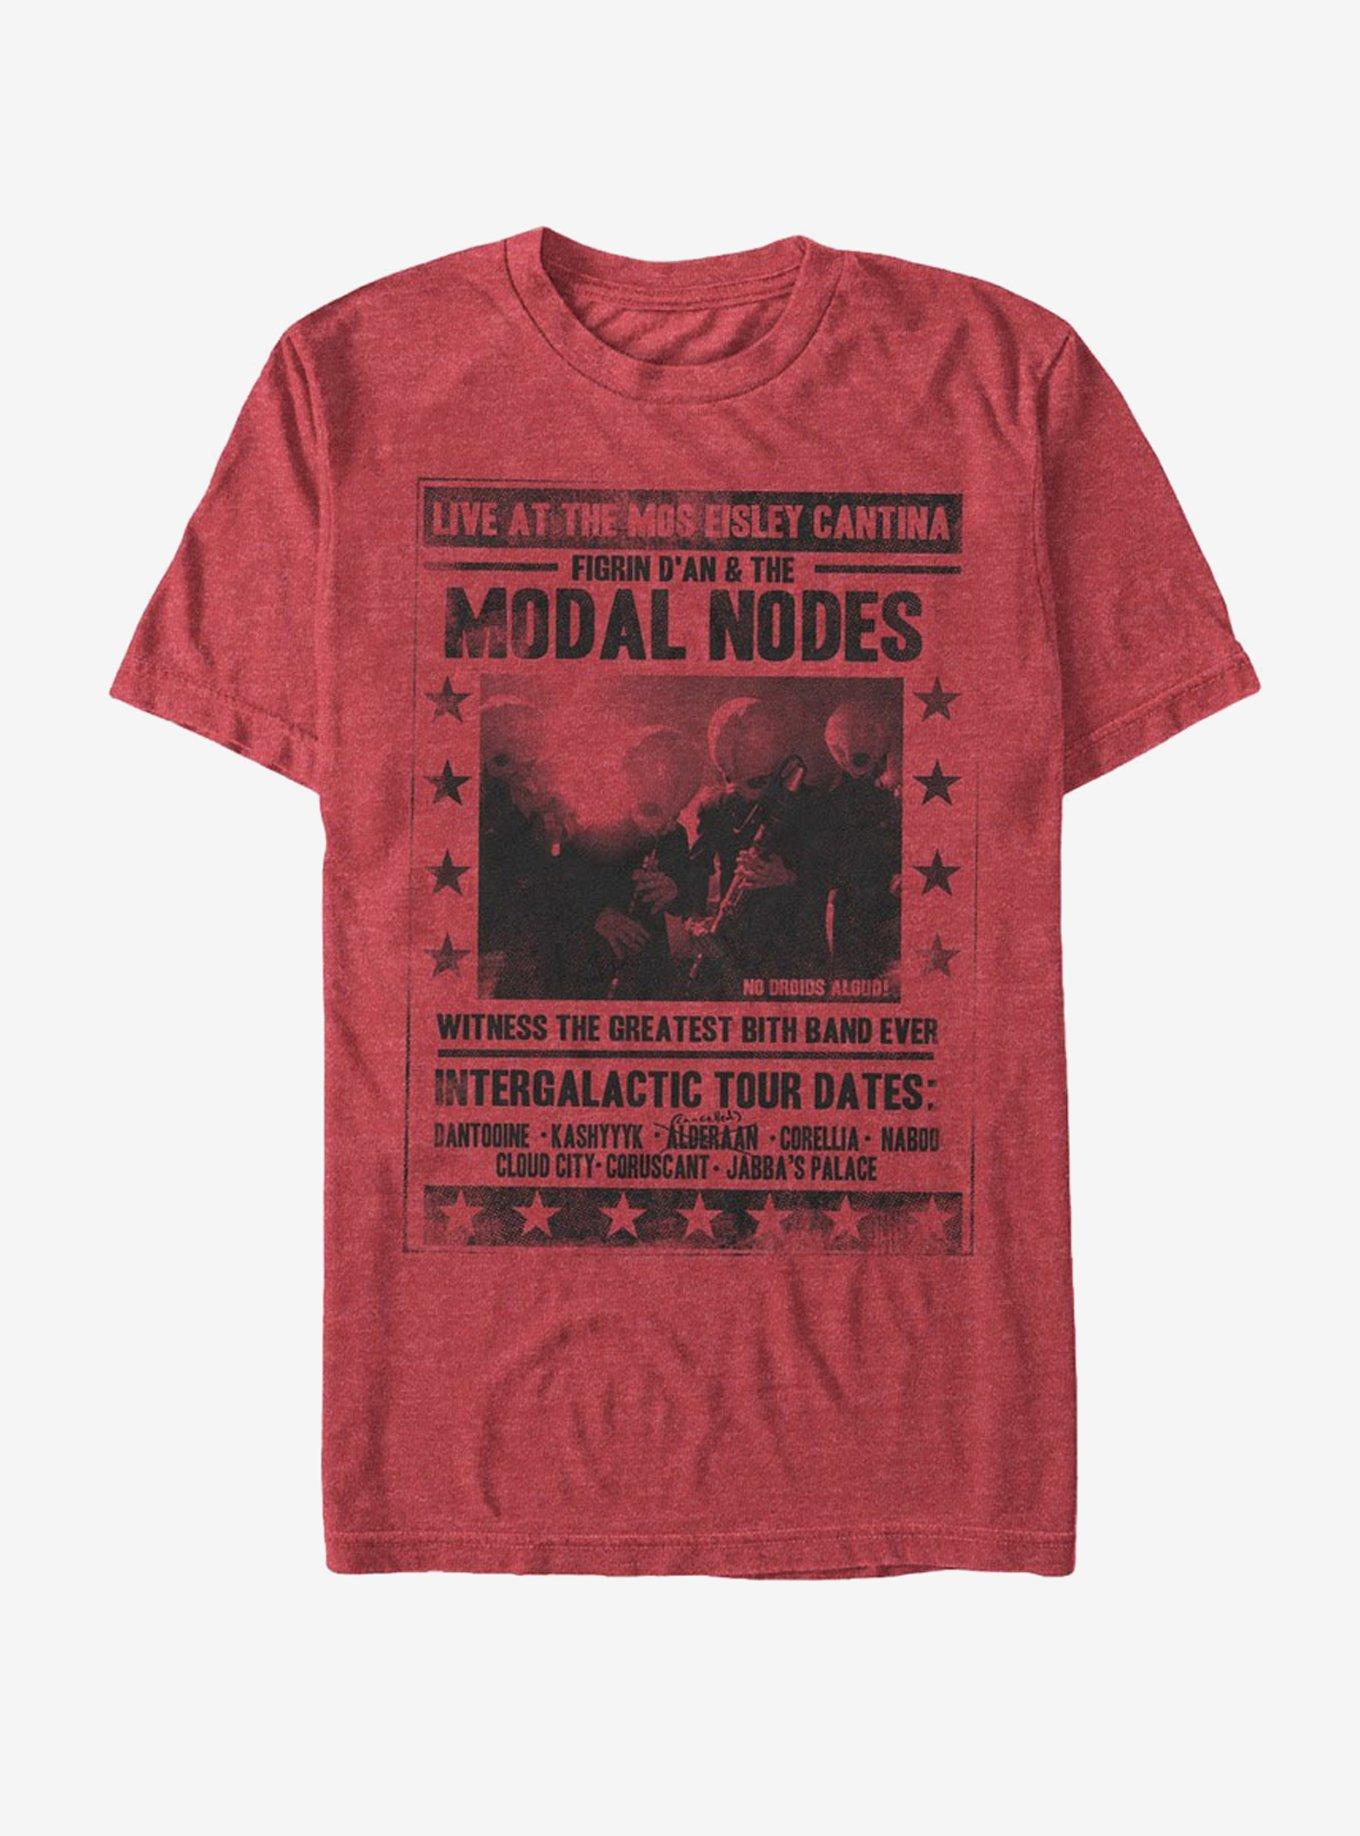 Star Wars Modal Nodes Tour Dates T-Shirt